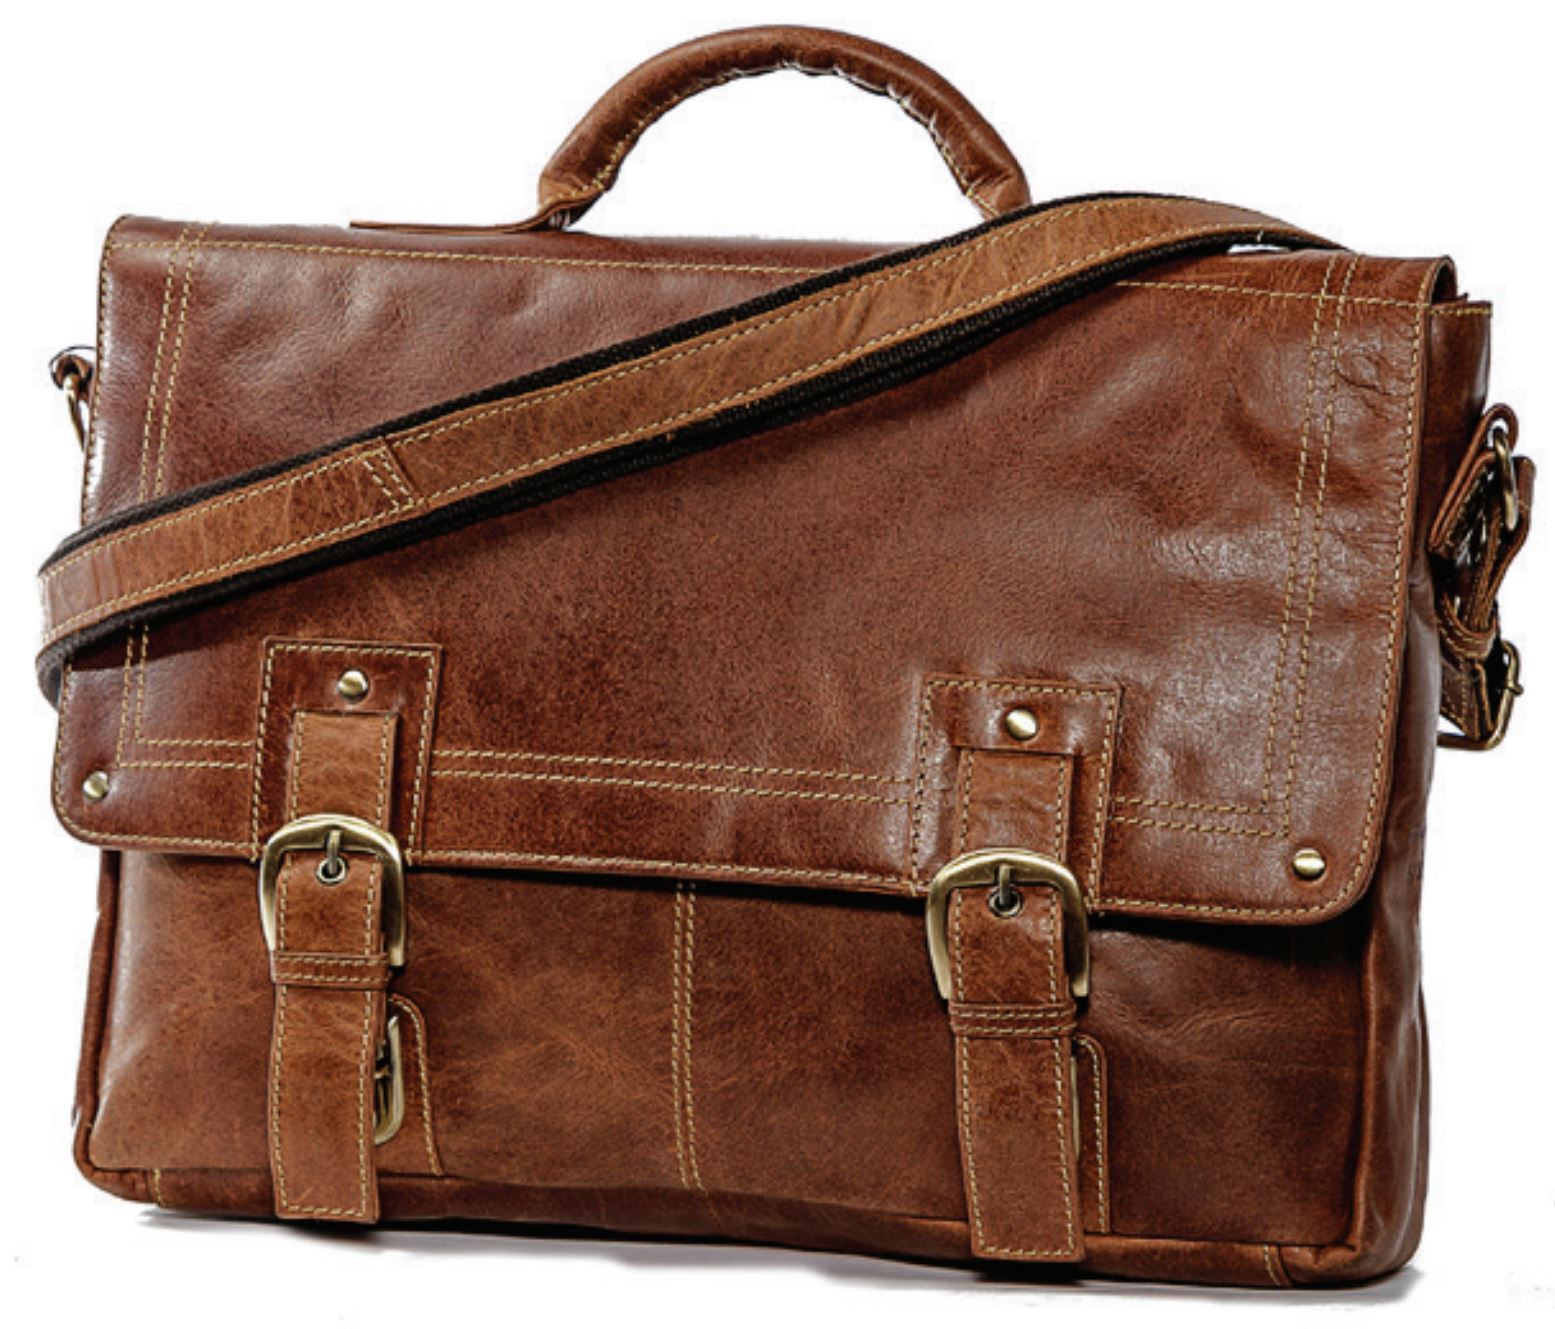 ESSAR BRIEFCASE Bags & Leather > Briefcase